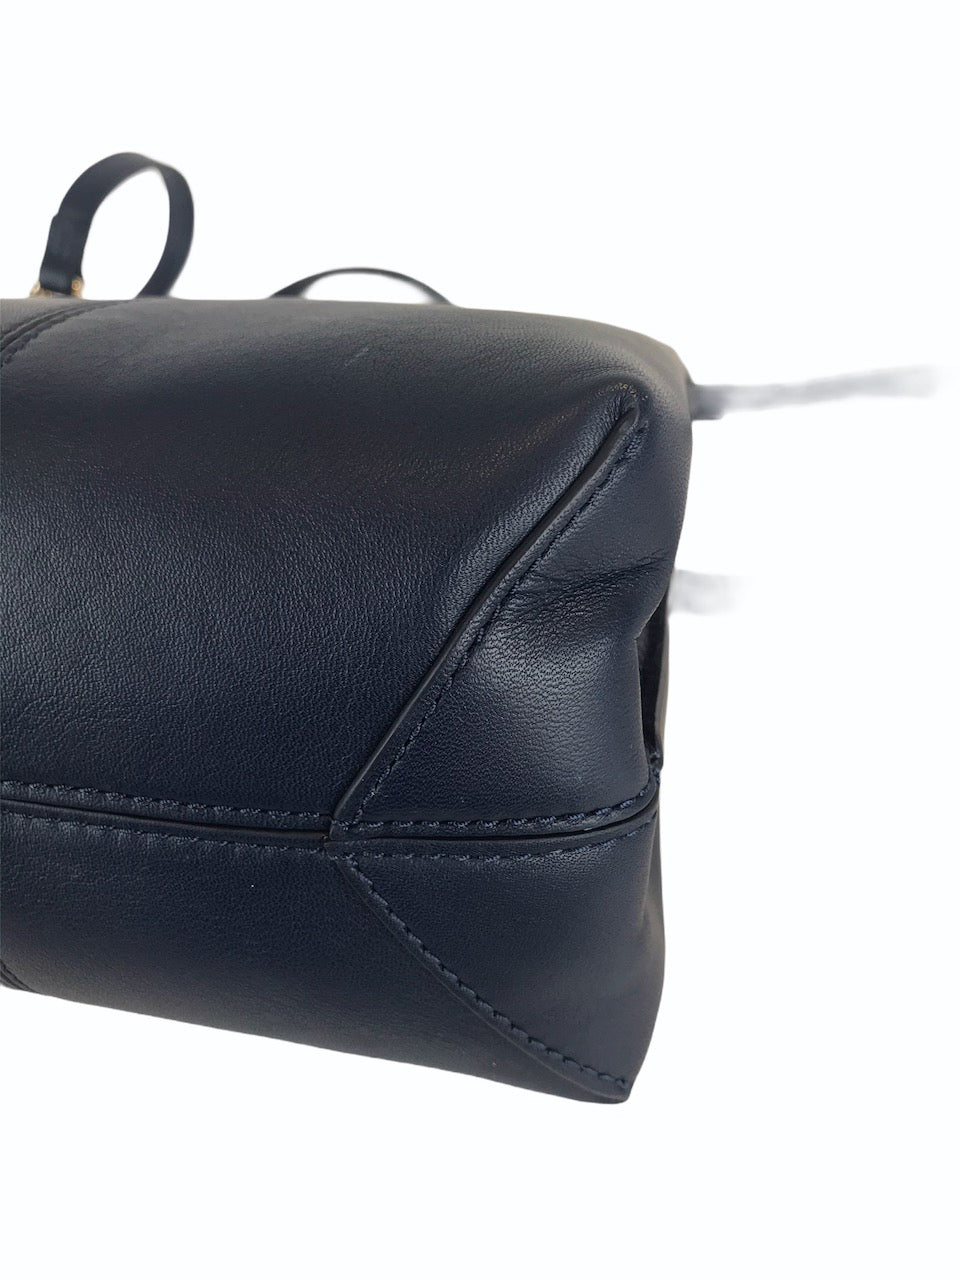 Tory Burch Navy Leather Shoulder Bag - As Seen On Instagram 09/09/2020 - Siopaella Designer Exchange